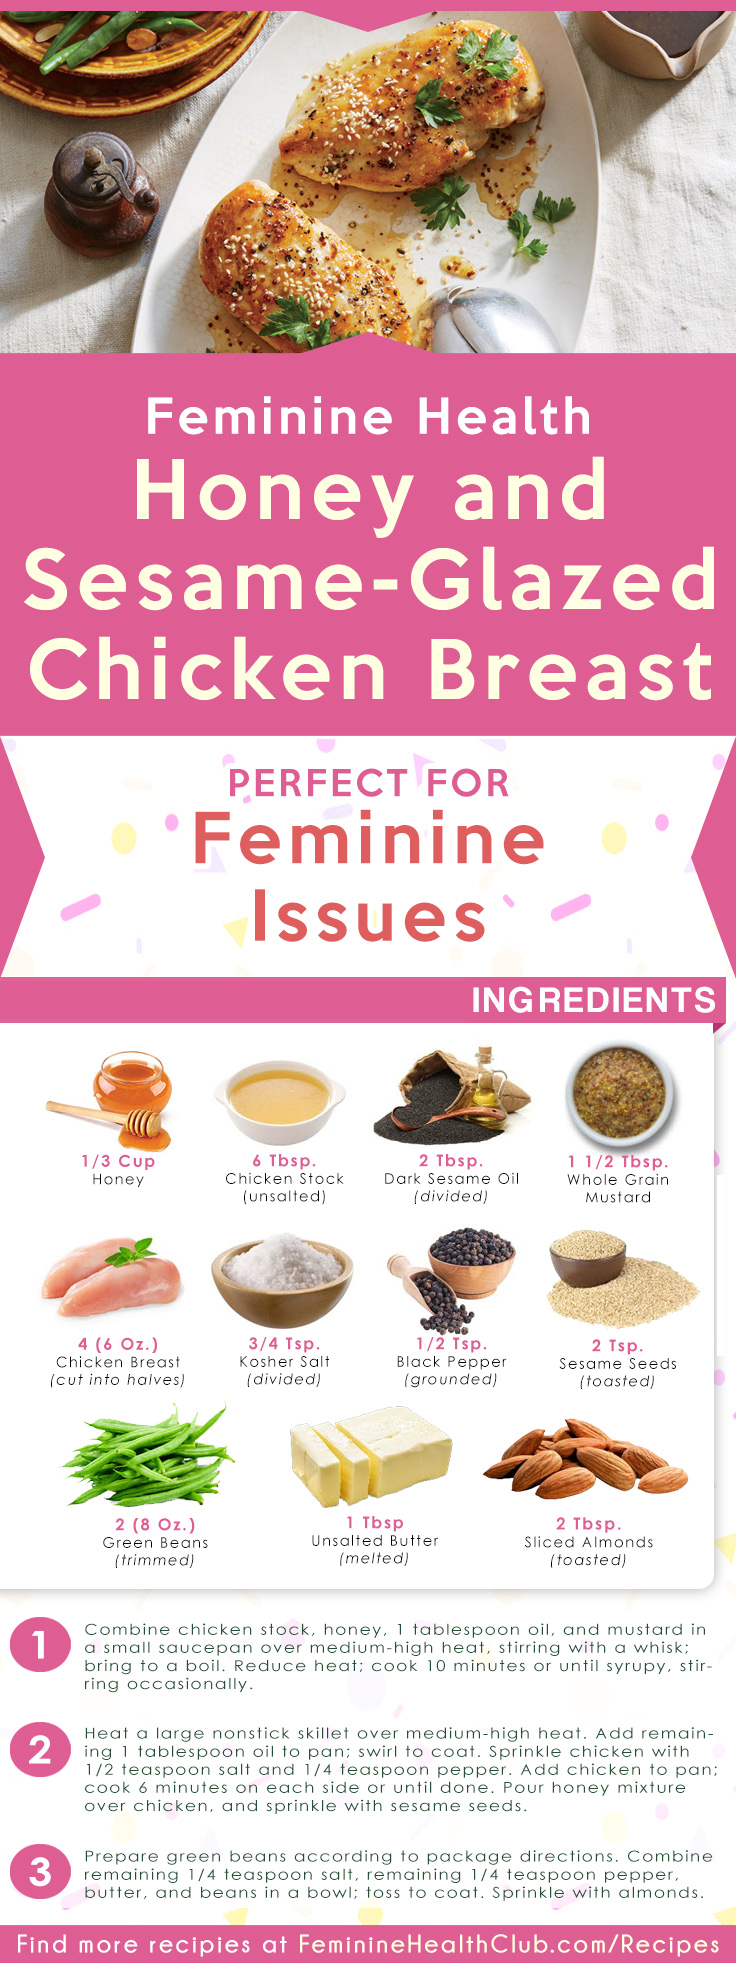 Honey and Sesame-Glazed Chicken Breast Recipe